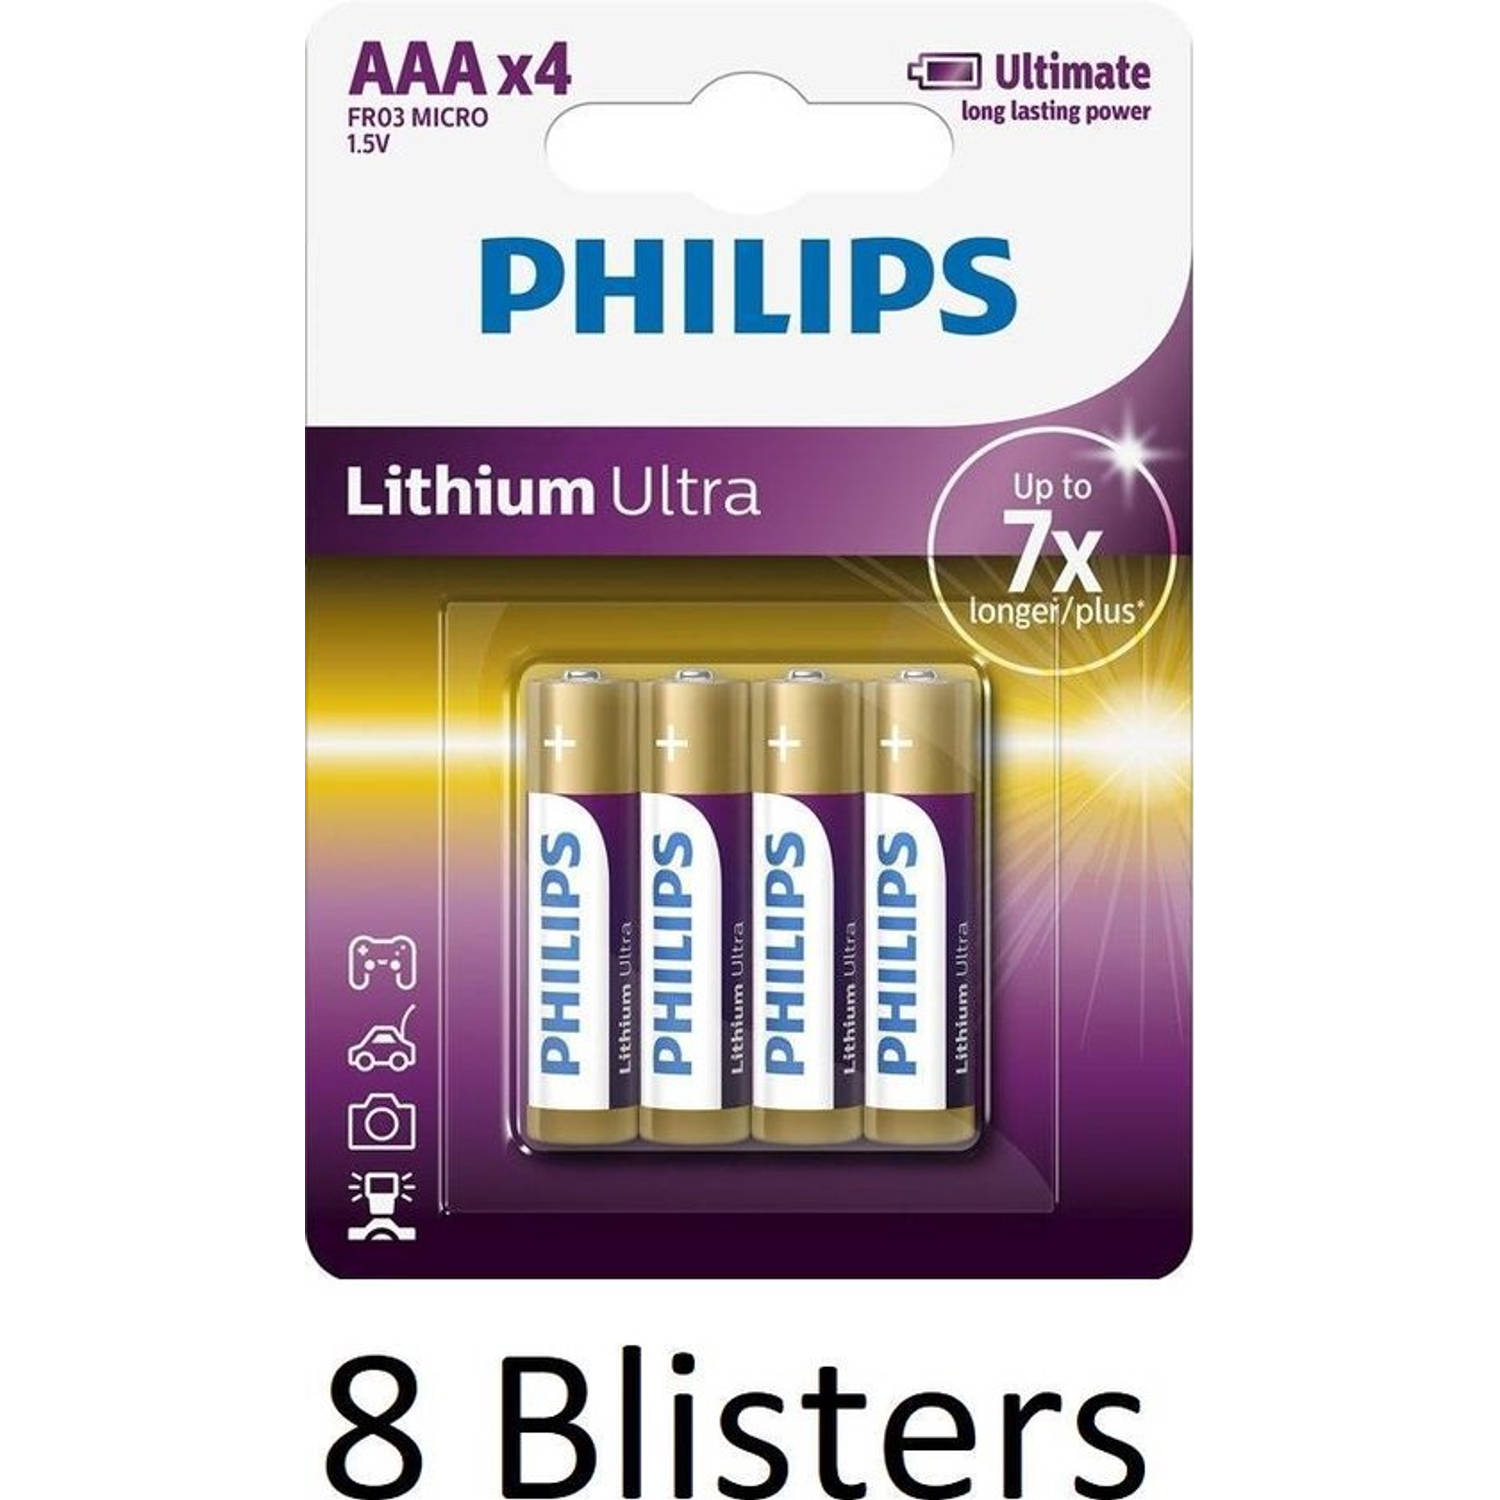 32 Stuks (8 Blisters a 4 st) Philips AAA Lithium Ultra Batterijen